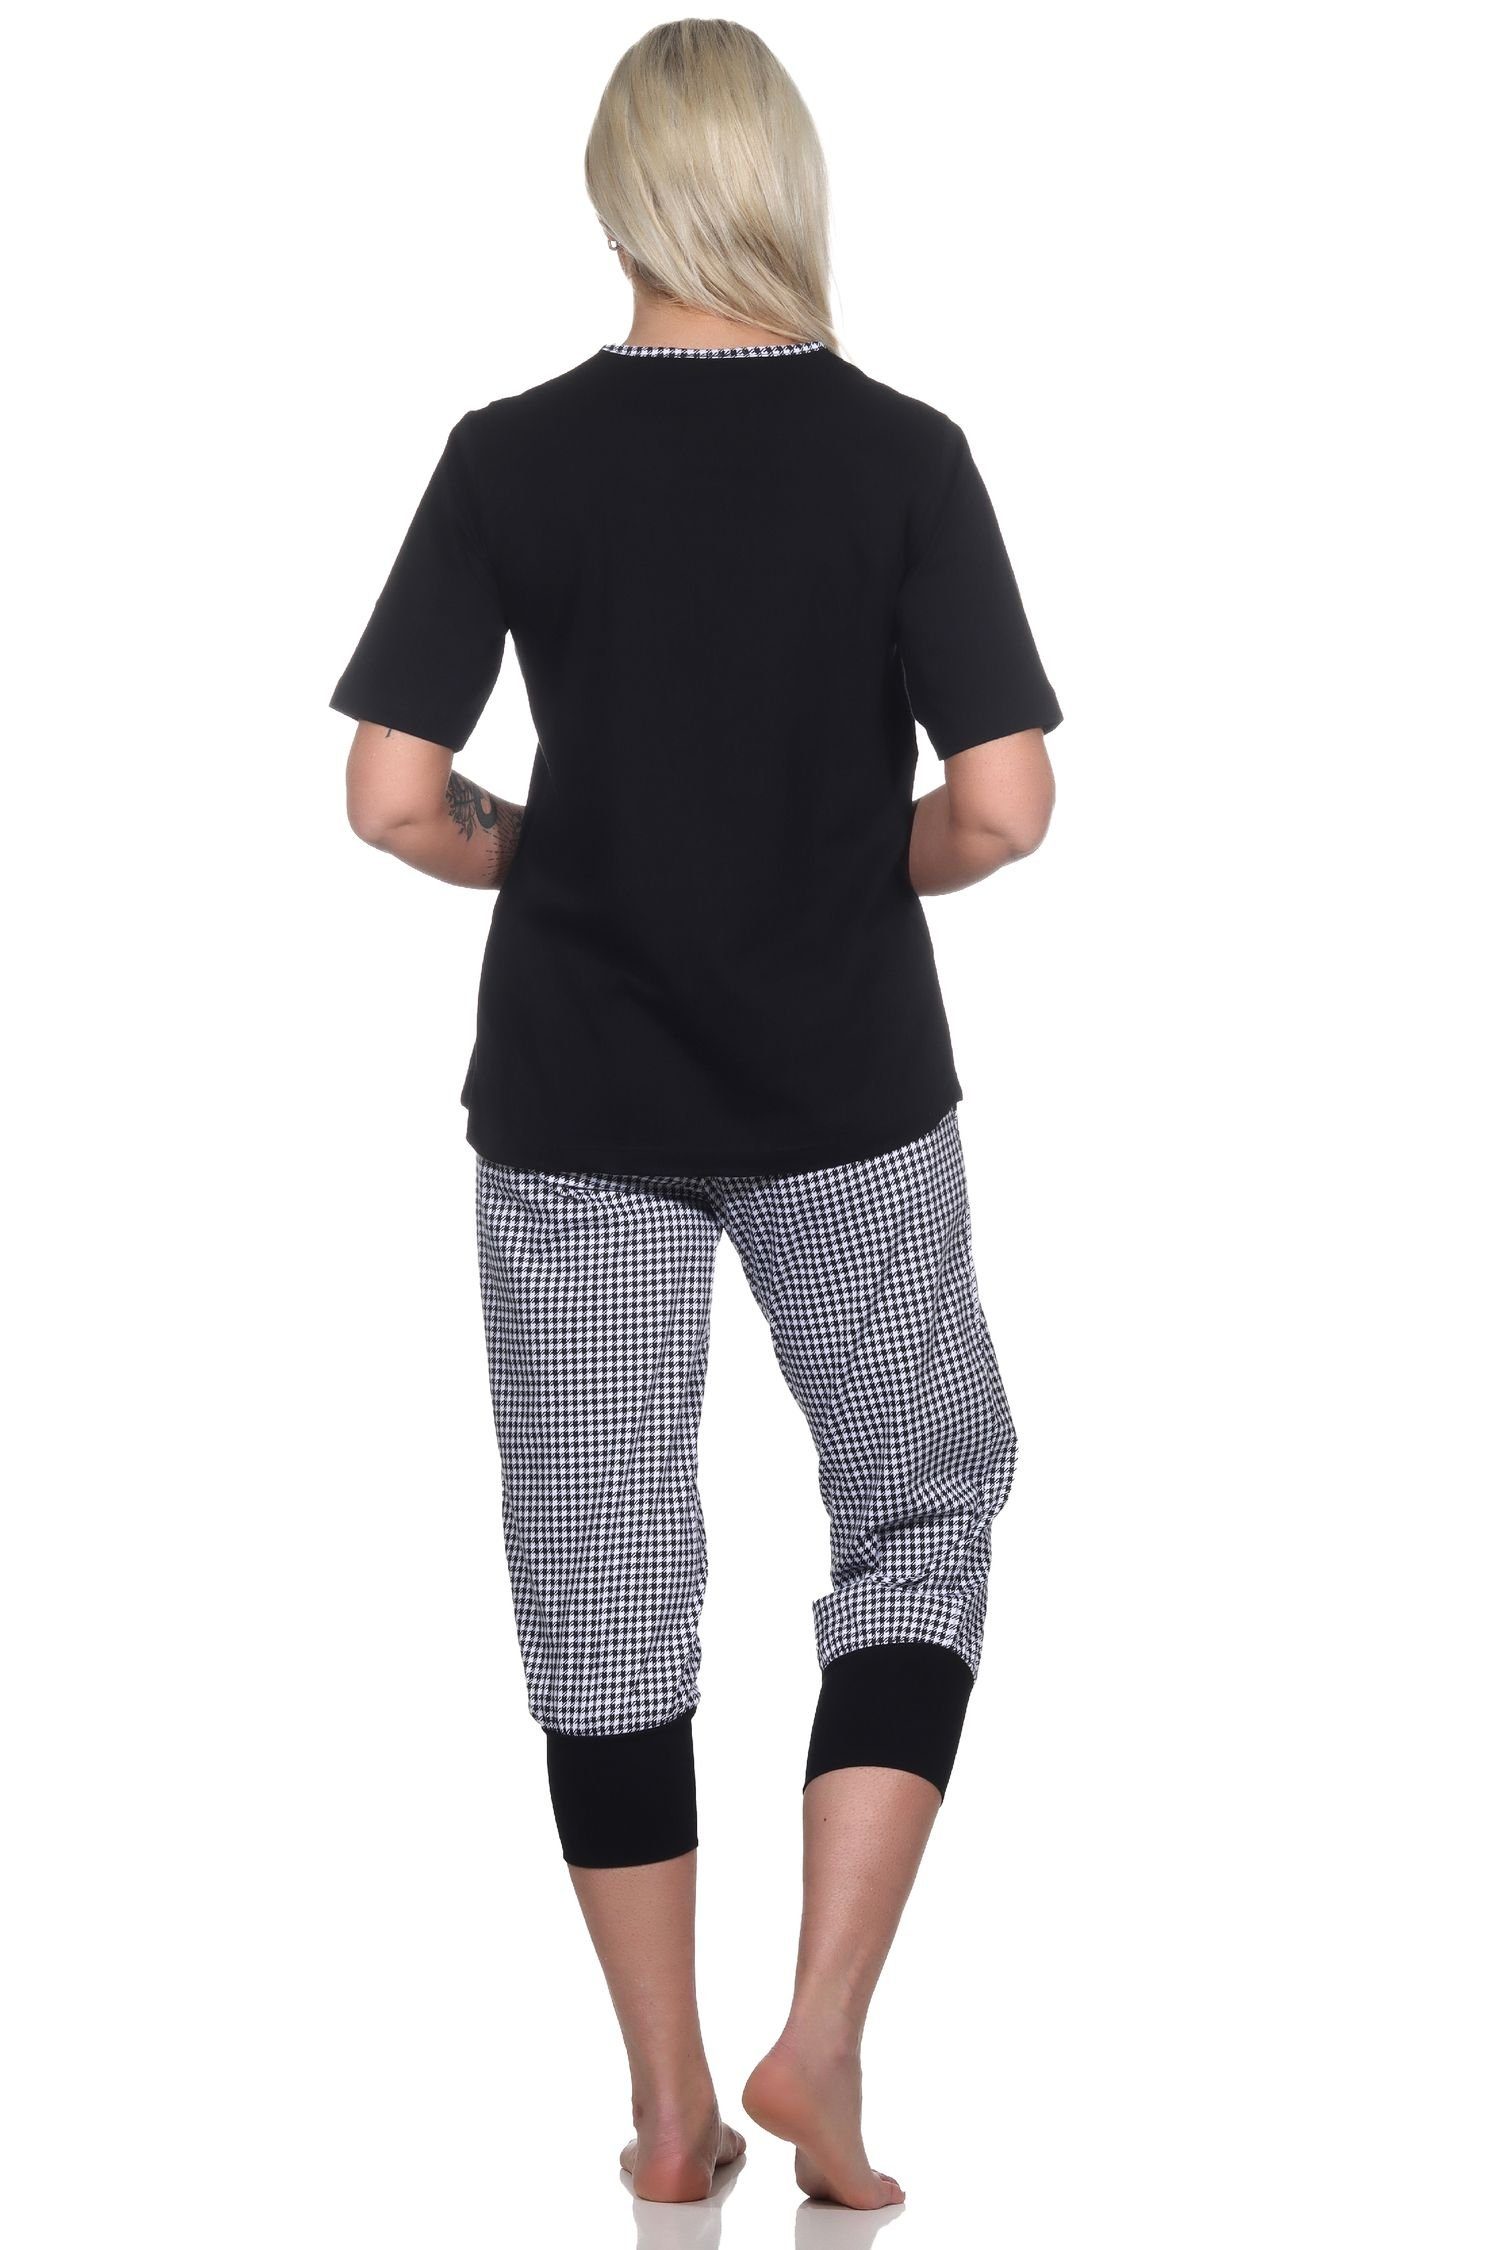 Damen Pyjama kurzarm Übergrößen im in Normann Pepita-Look, Schlafanzug auch Capri schwarz